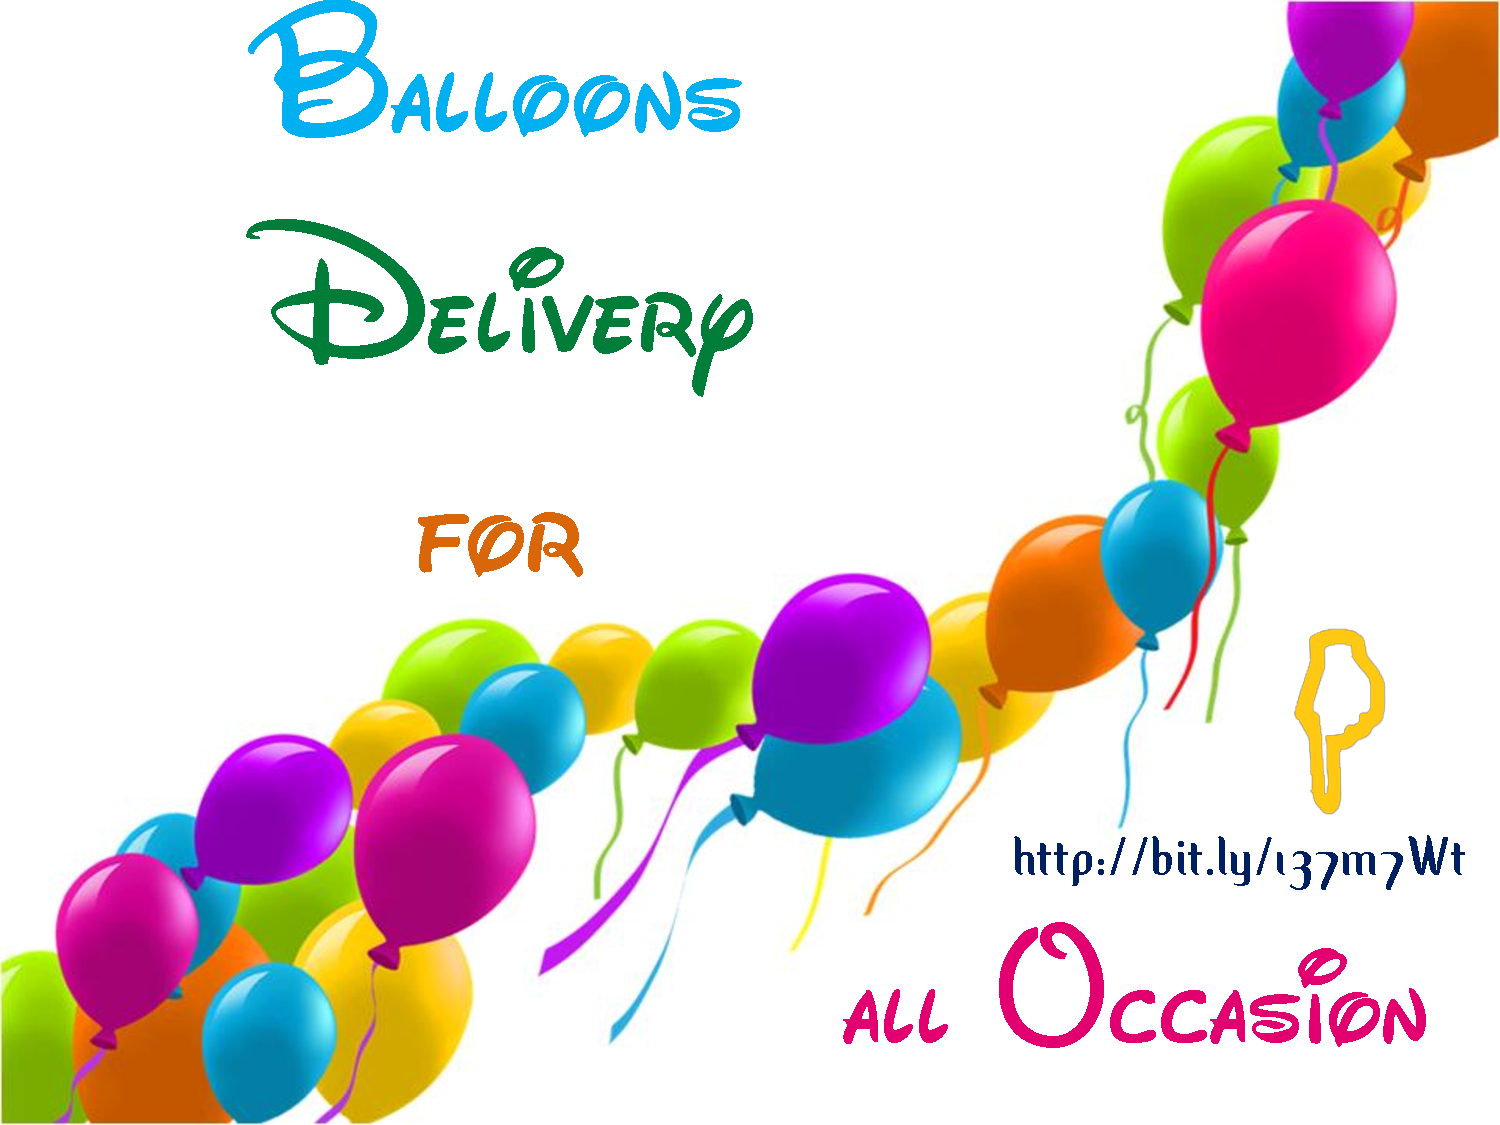 Send Birthday Balloons. Deliver Birthday Balloons. 6 сентября день рождения